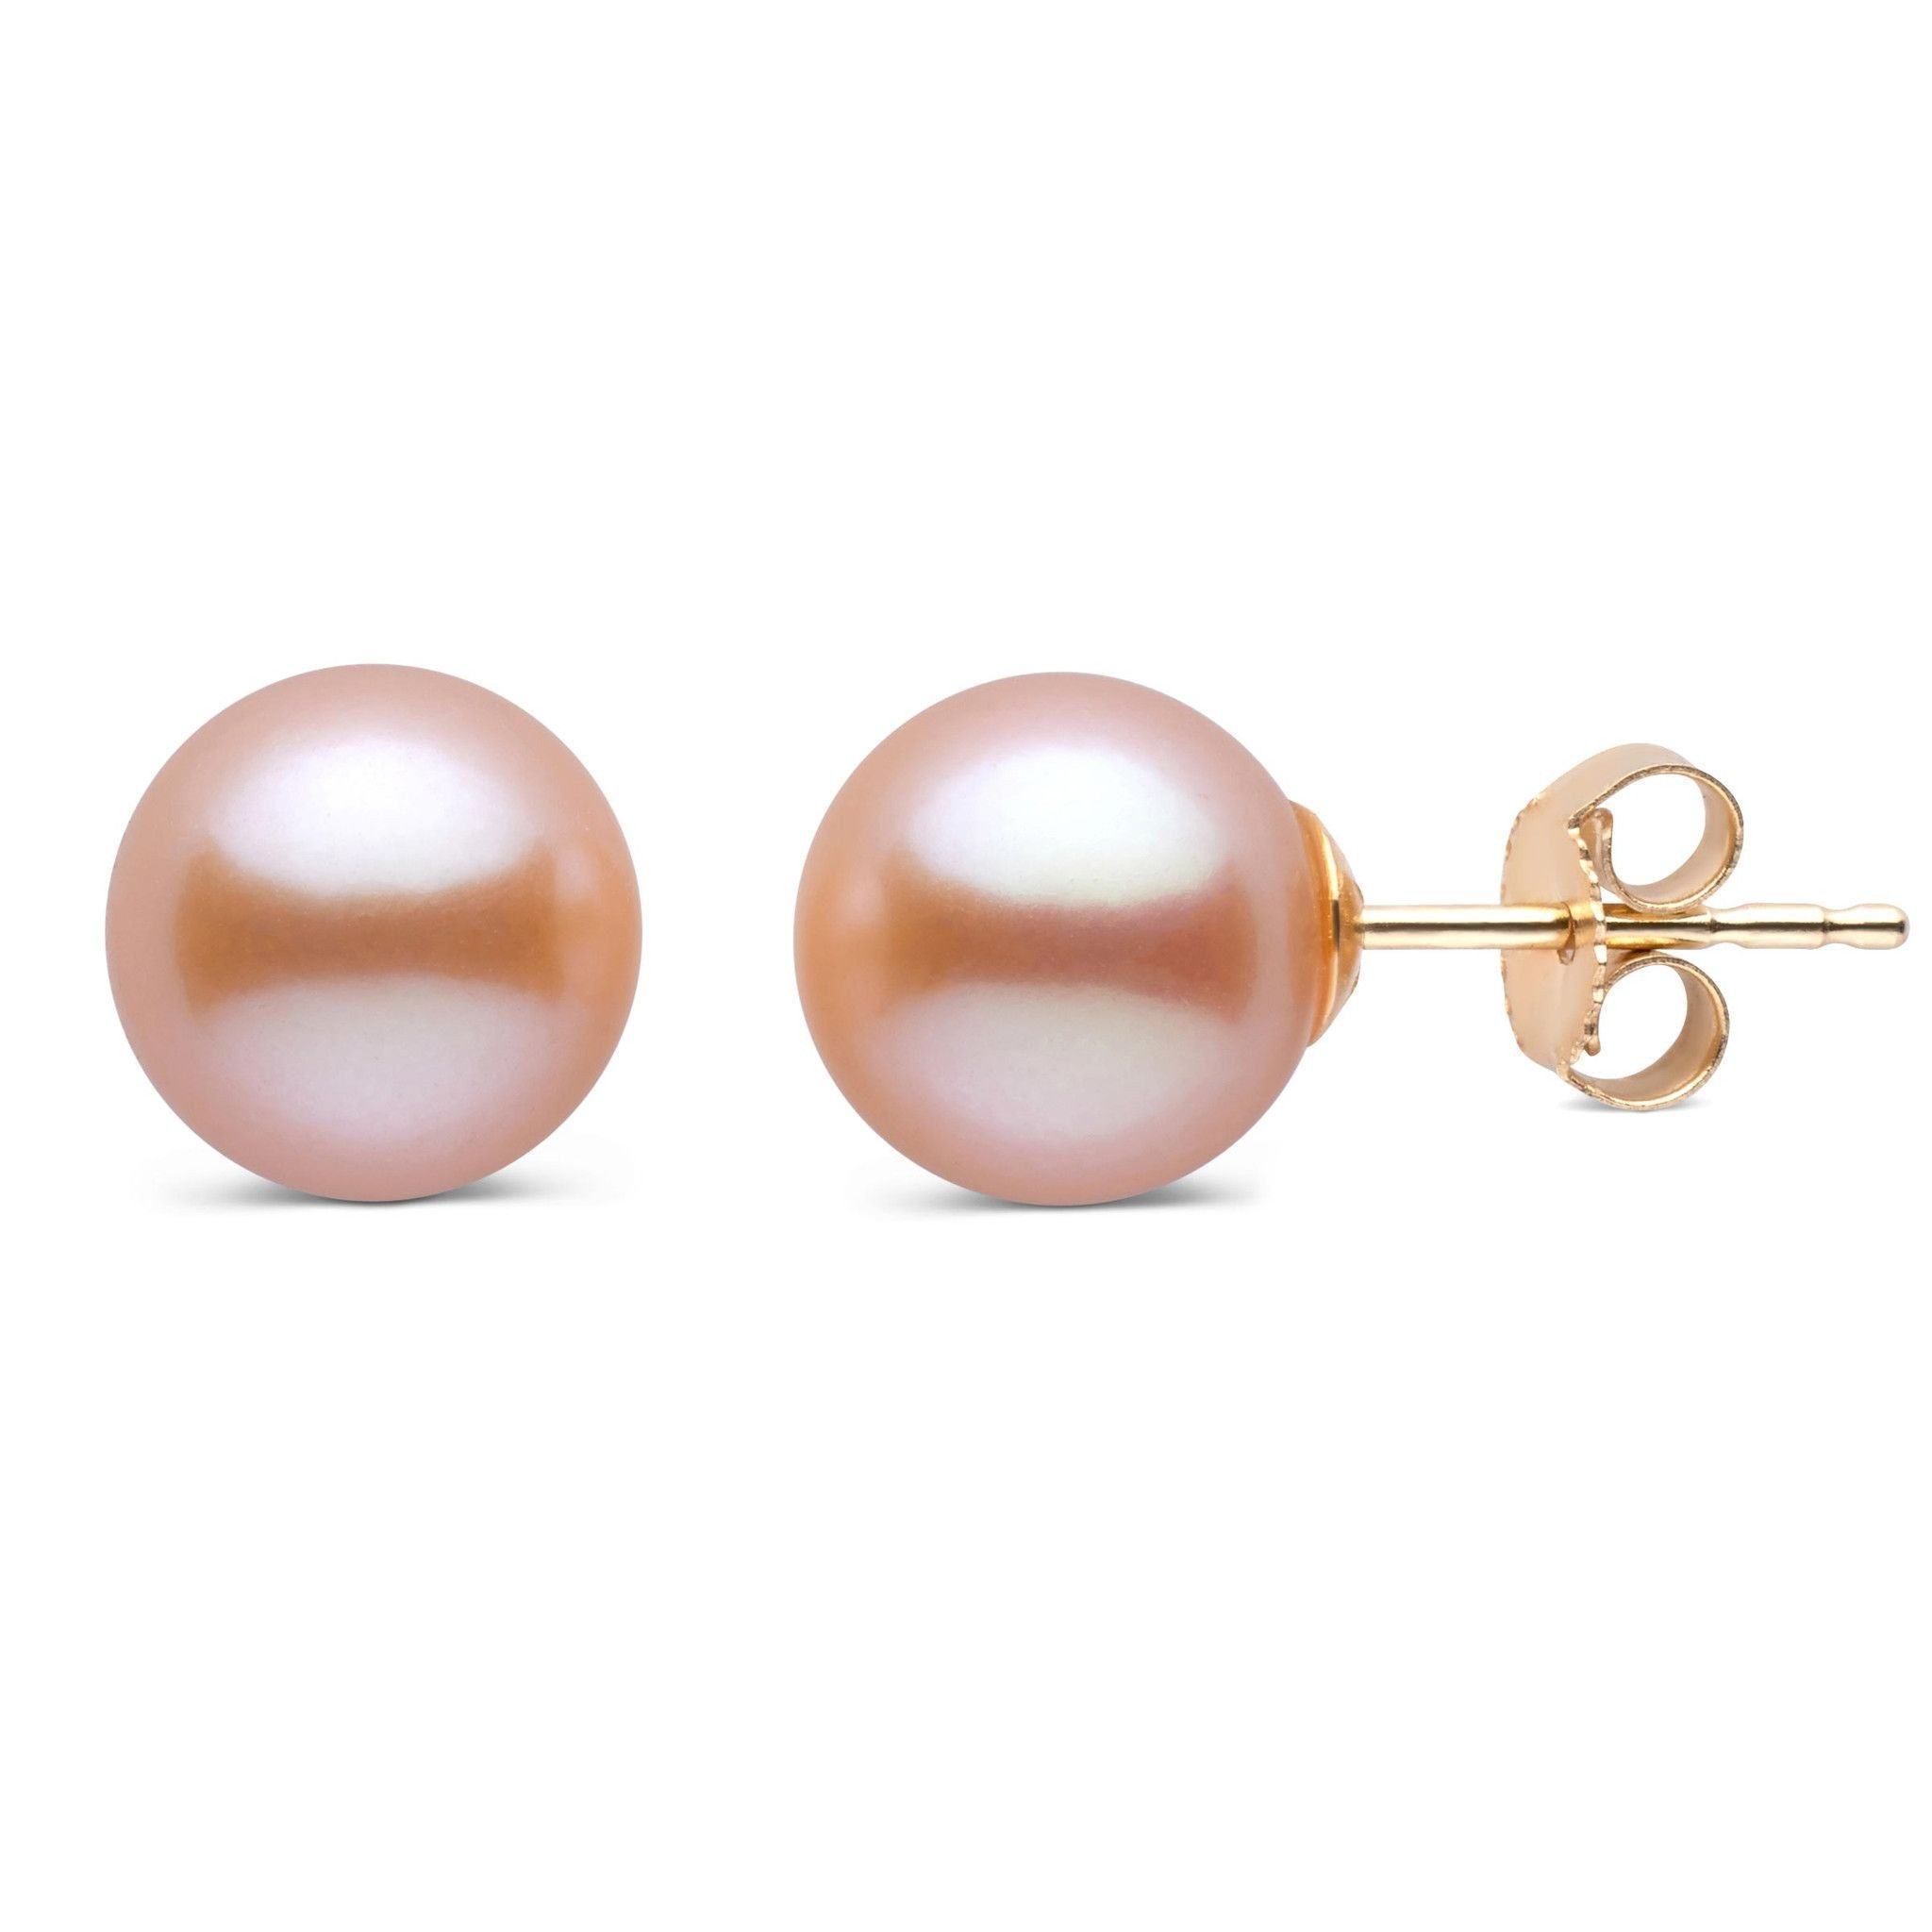 8.5-9.0 mm AAA Pink to Peach Freshwater Pearl Stud Earrings